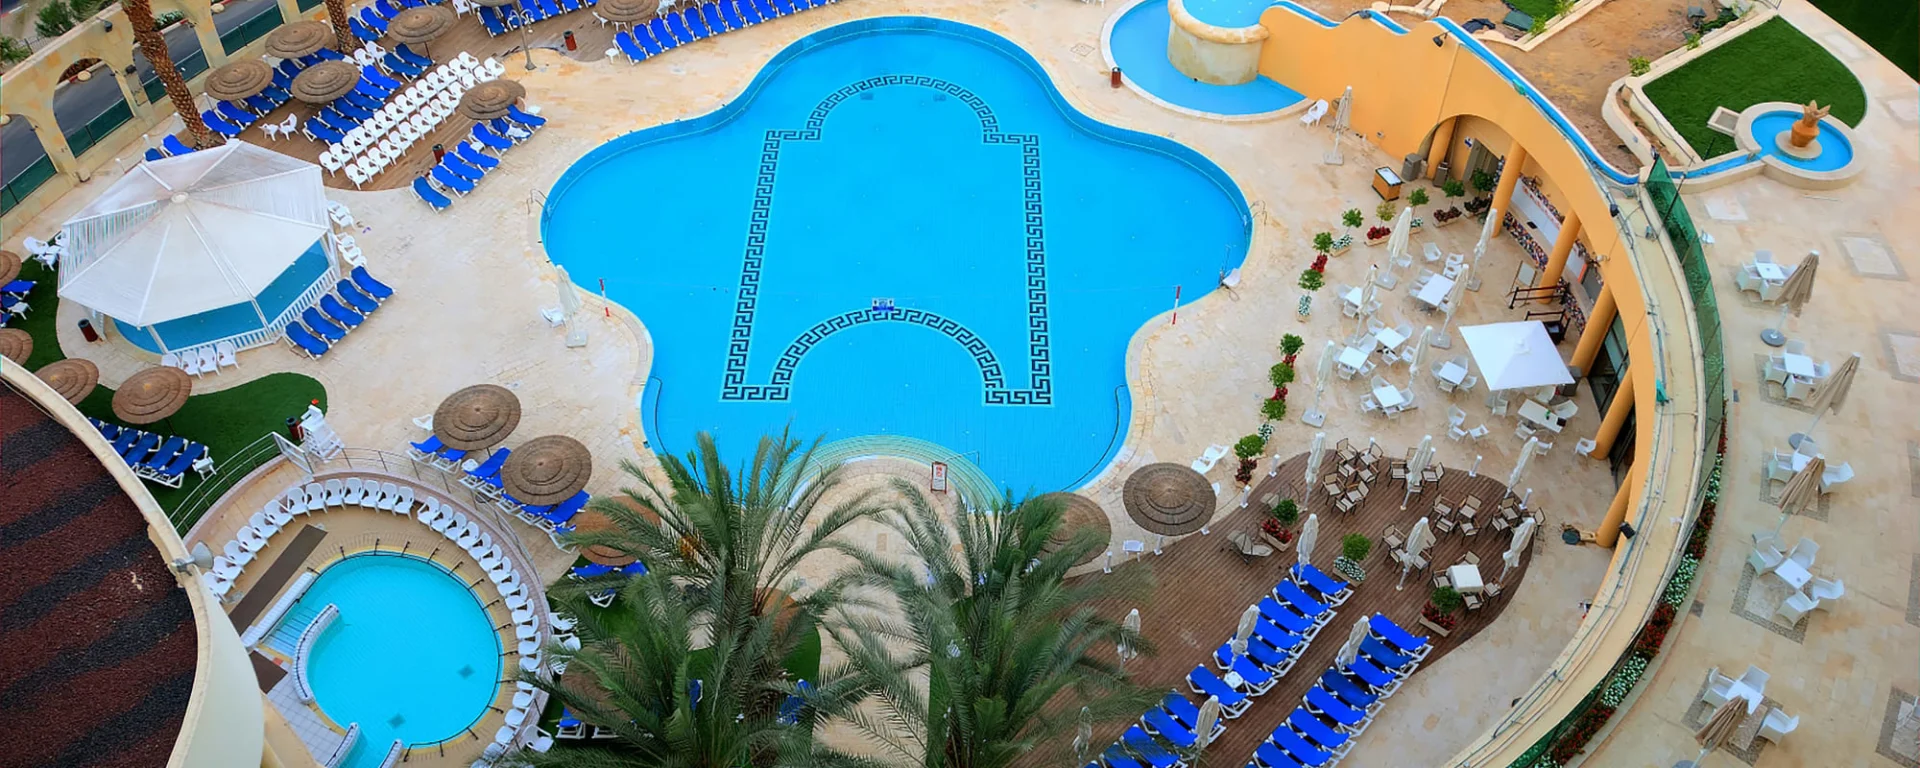 Enjoy Hotel Dead Sea (former Daniel) in Totes Meer: Totes Meer Daniel Hotel Dead Sea Pool